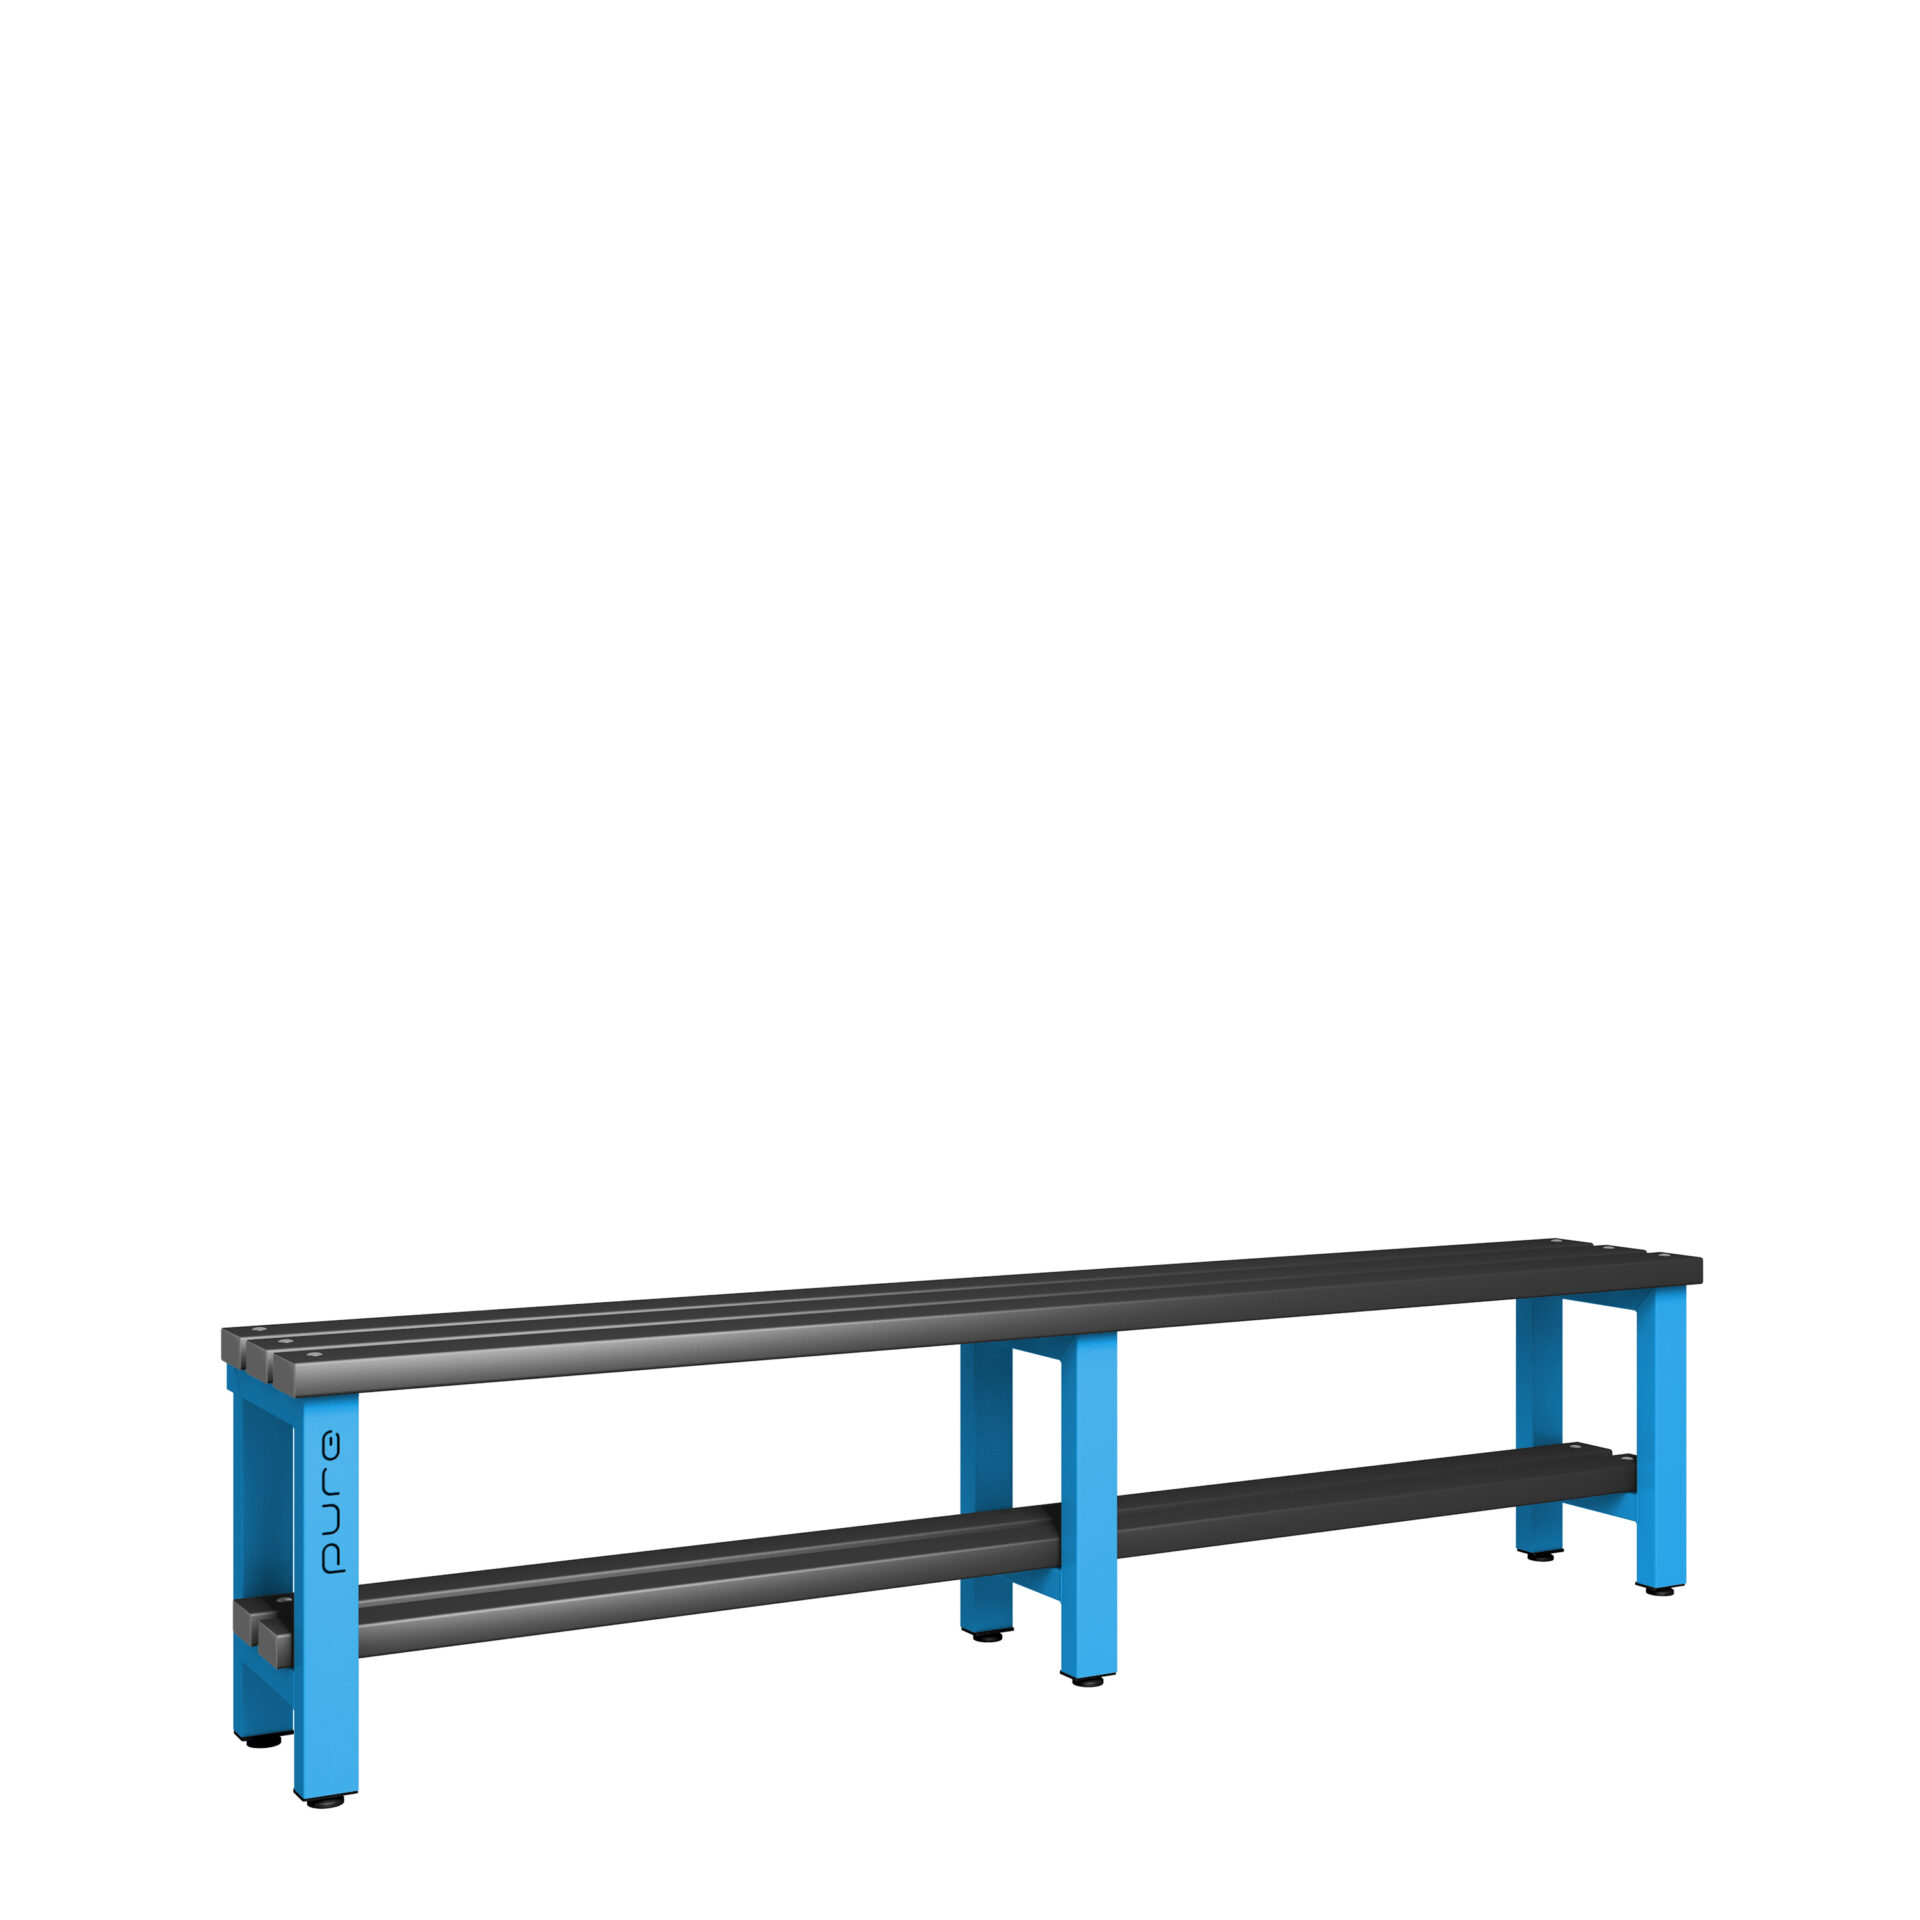 Pure Carbon Zero Single Sided 2000mm Standard Bench With Shoe Shelf - Cornflower Blue / Black Polymer